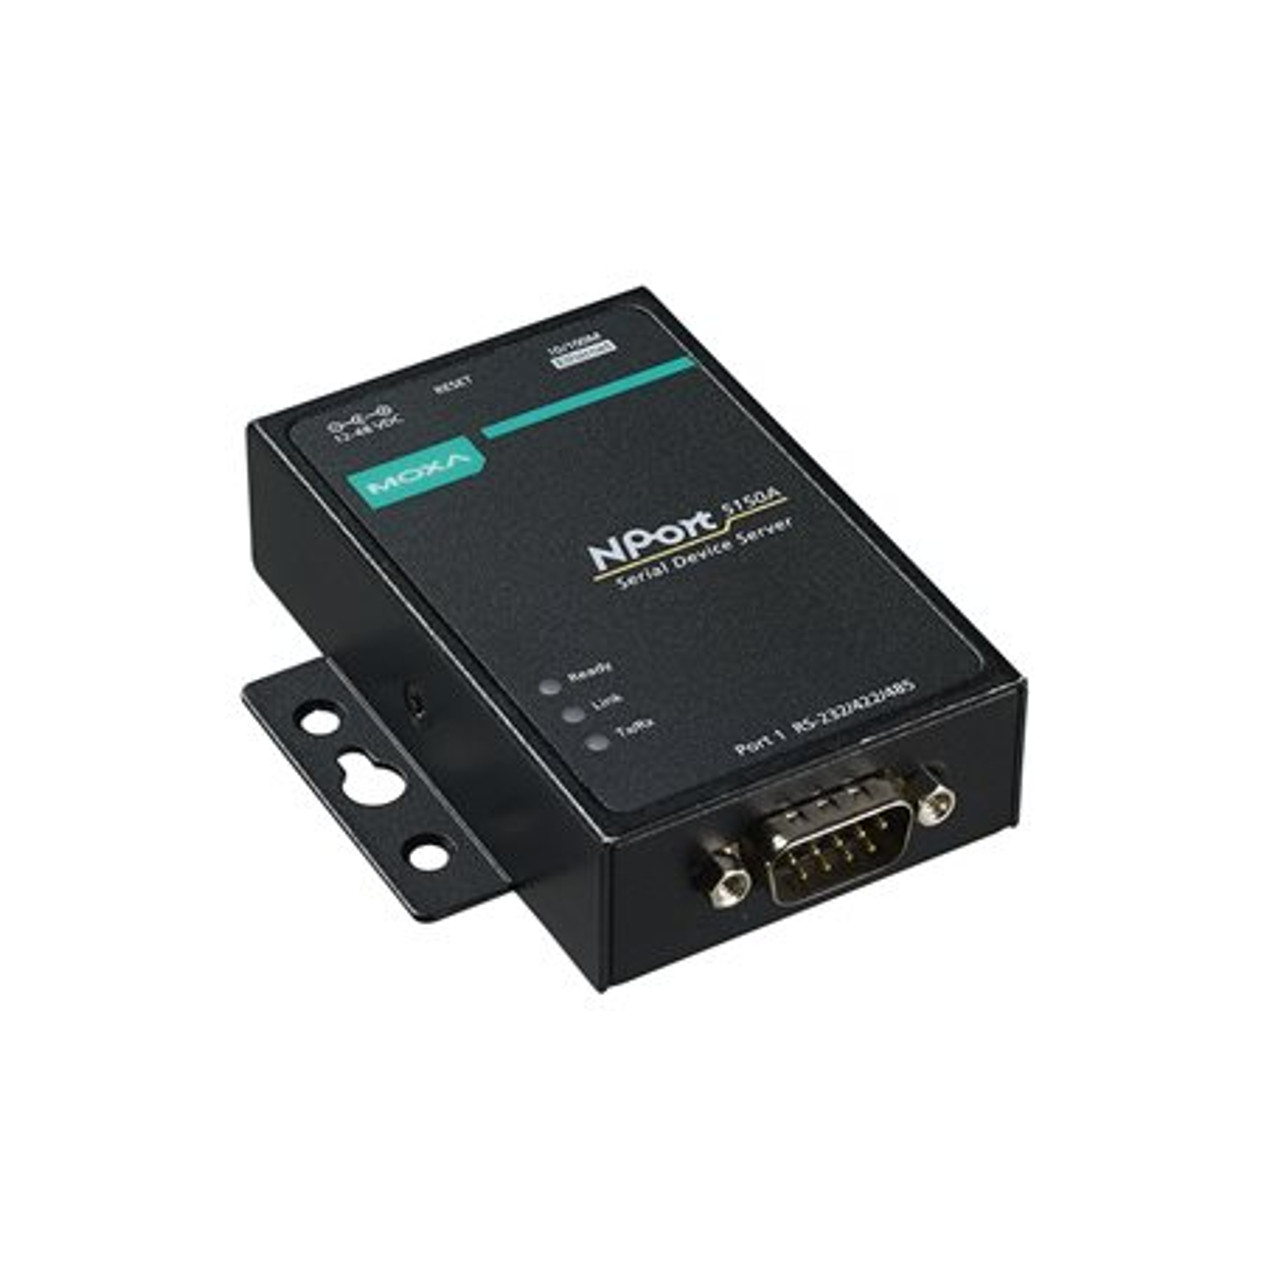 Moxa NPort 5150A: 1-Port Device Server, RS-232/422/485, 12~48VDC